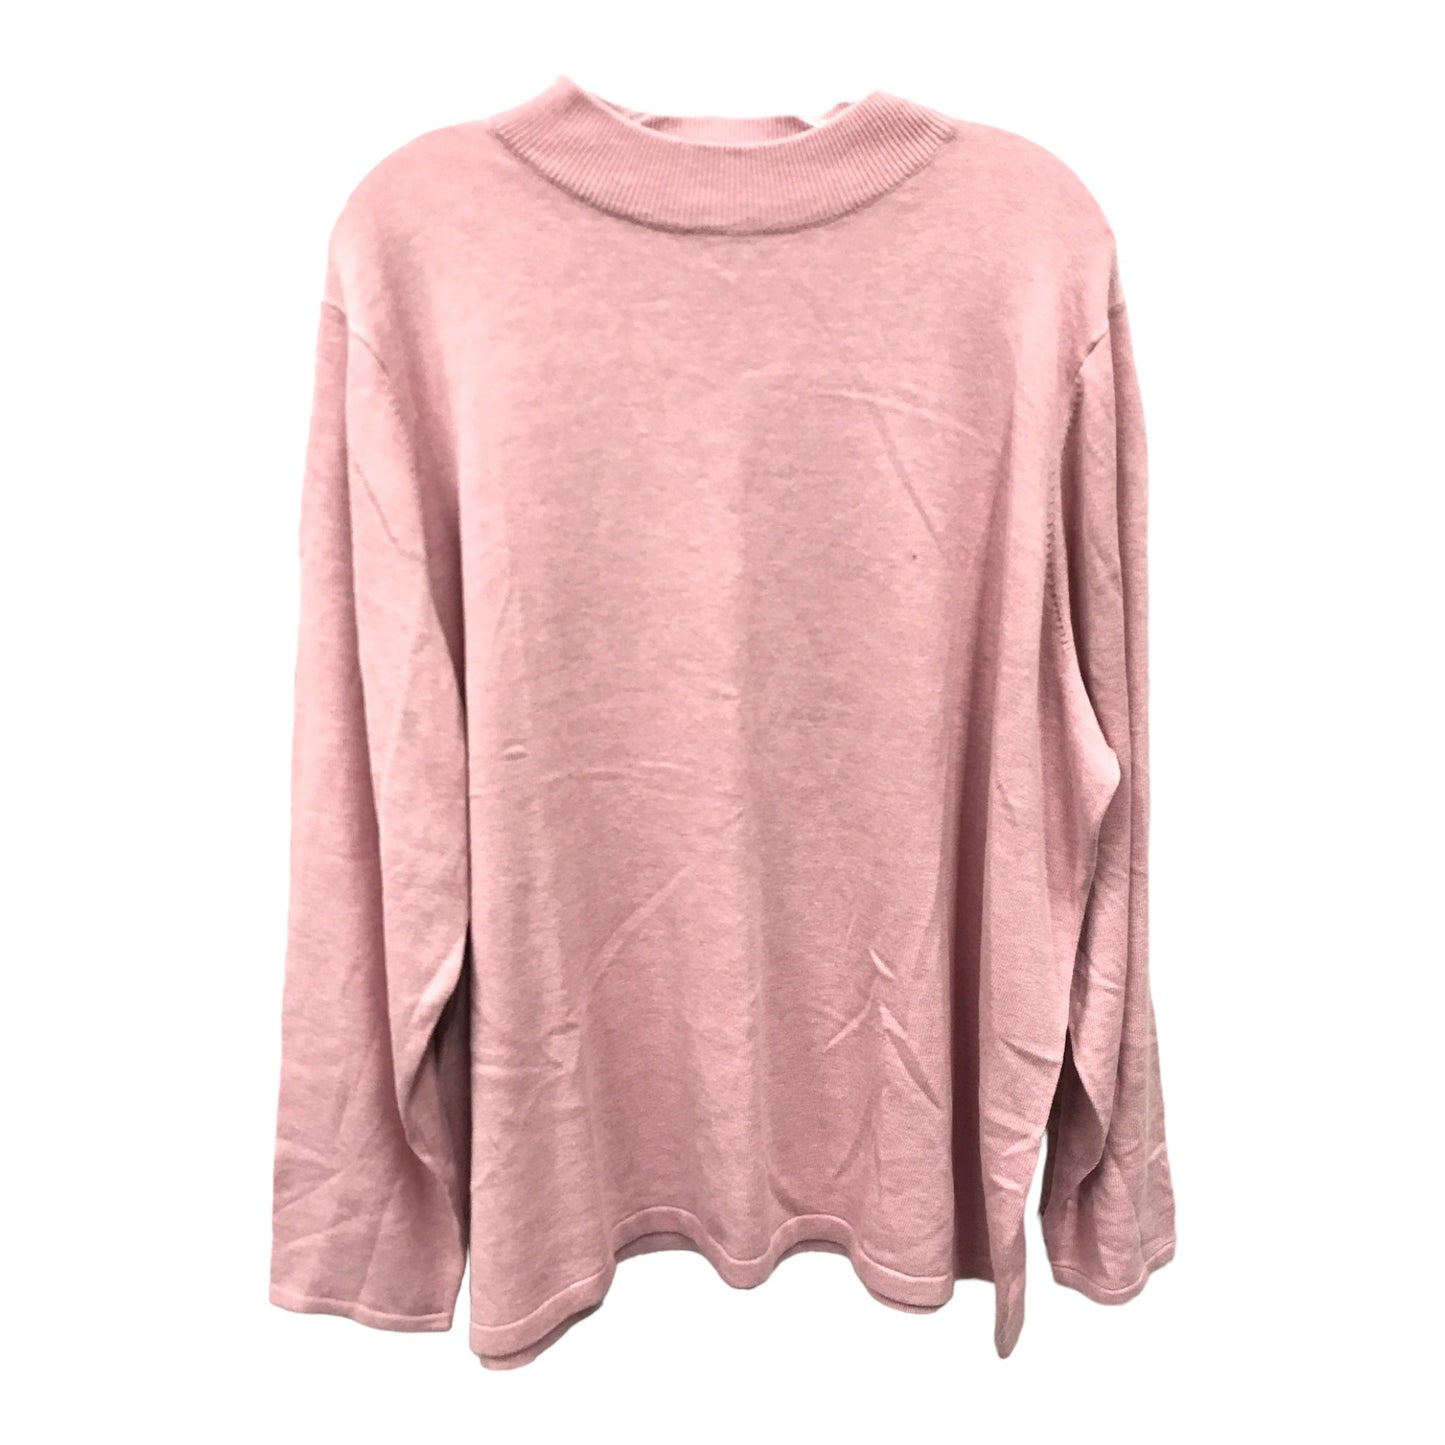 Sweater By Joan Rivers  Size: 3x